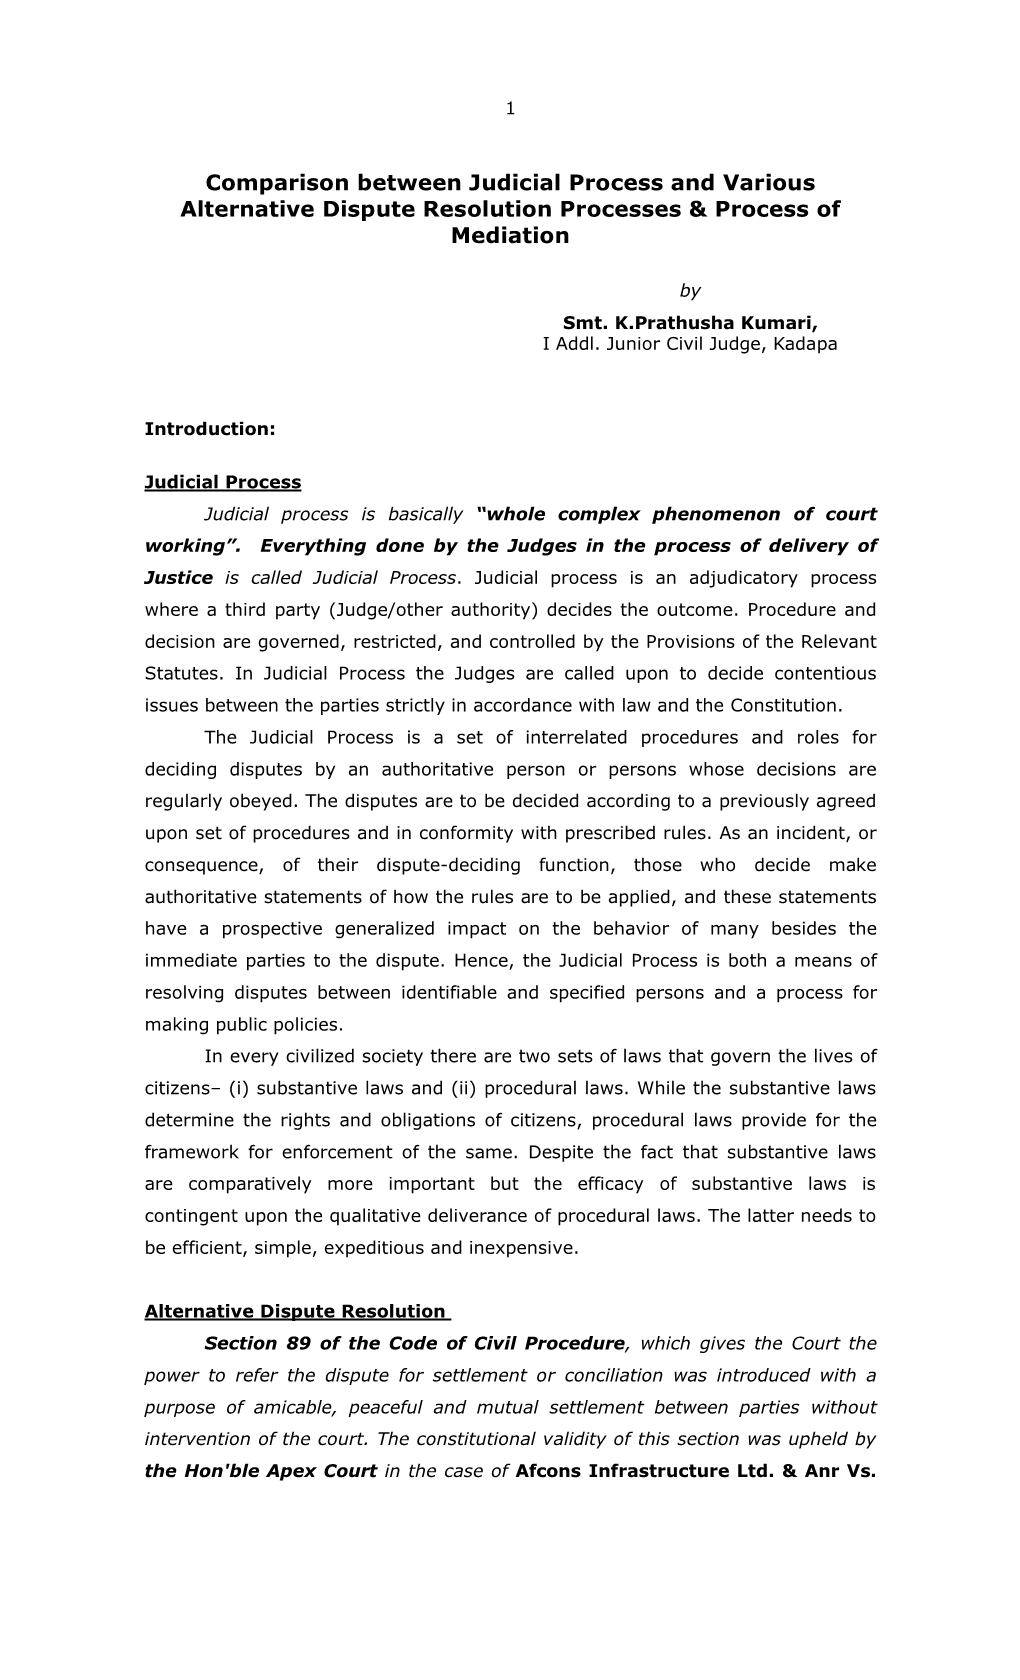 Comparison Between Judicial Process and Various Alternative Dispute Resolution Processes & Process of Mediation